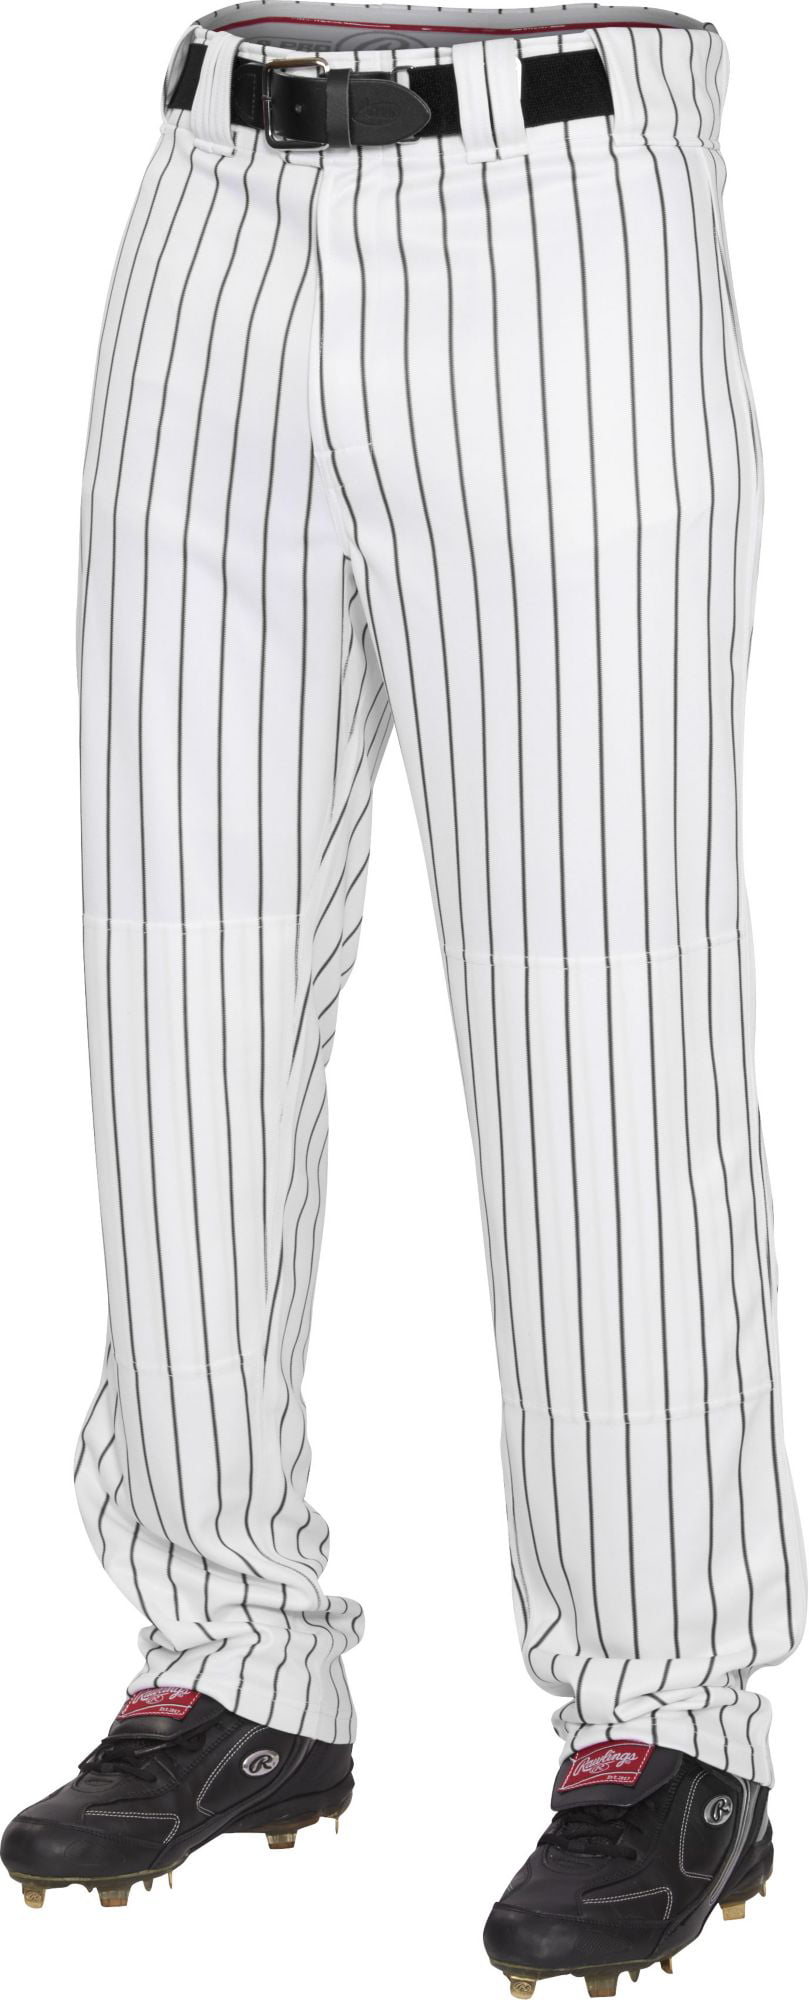 CHAMPRO VALUE PULL-UP PANT YOUTH Baseball Pants GREY S M L XL 2X You Pick Size